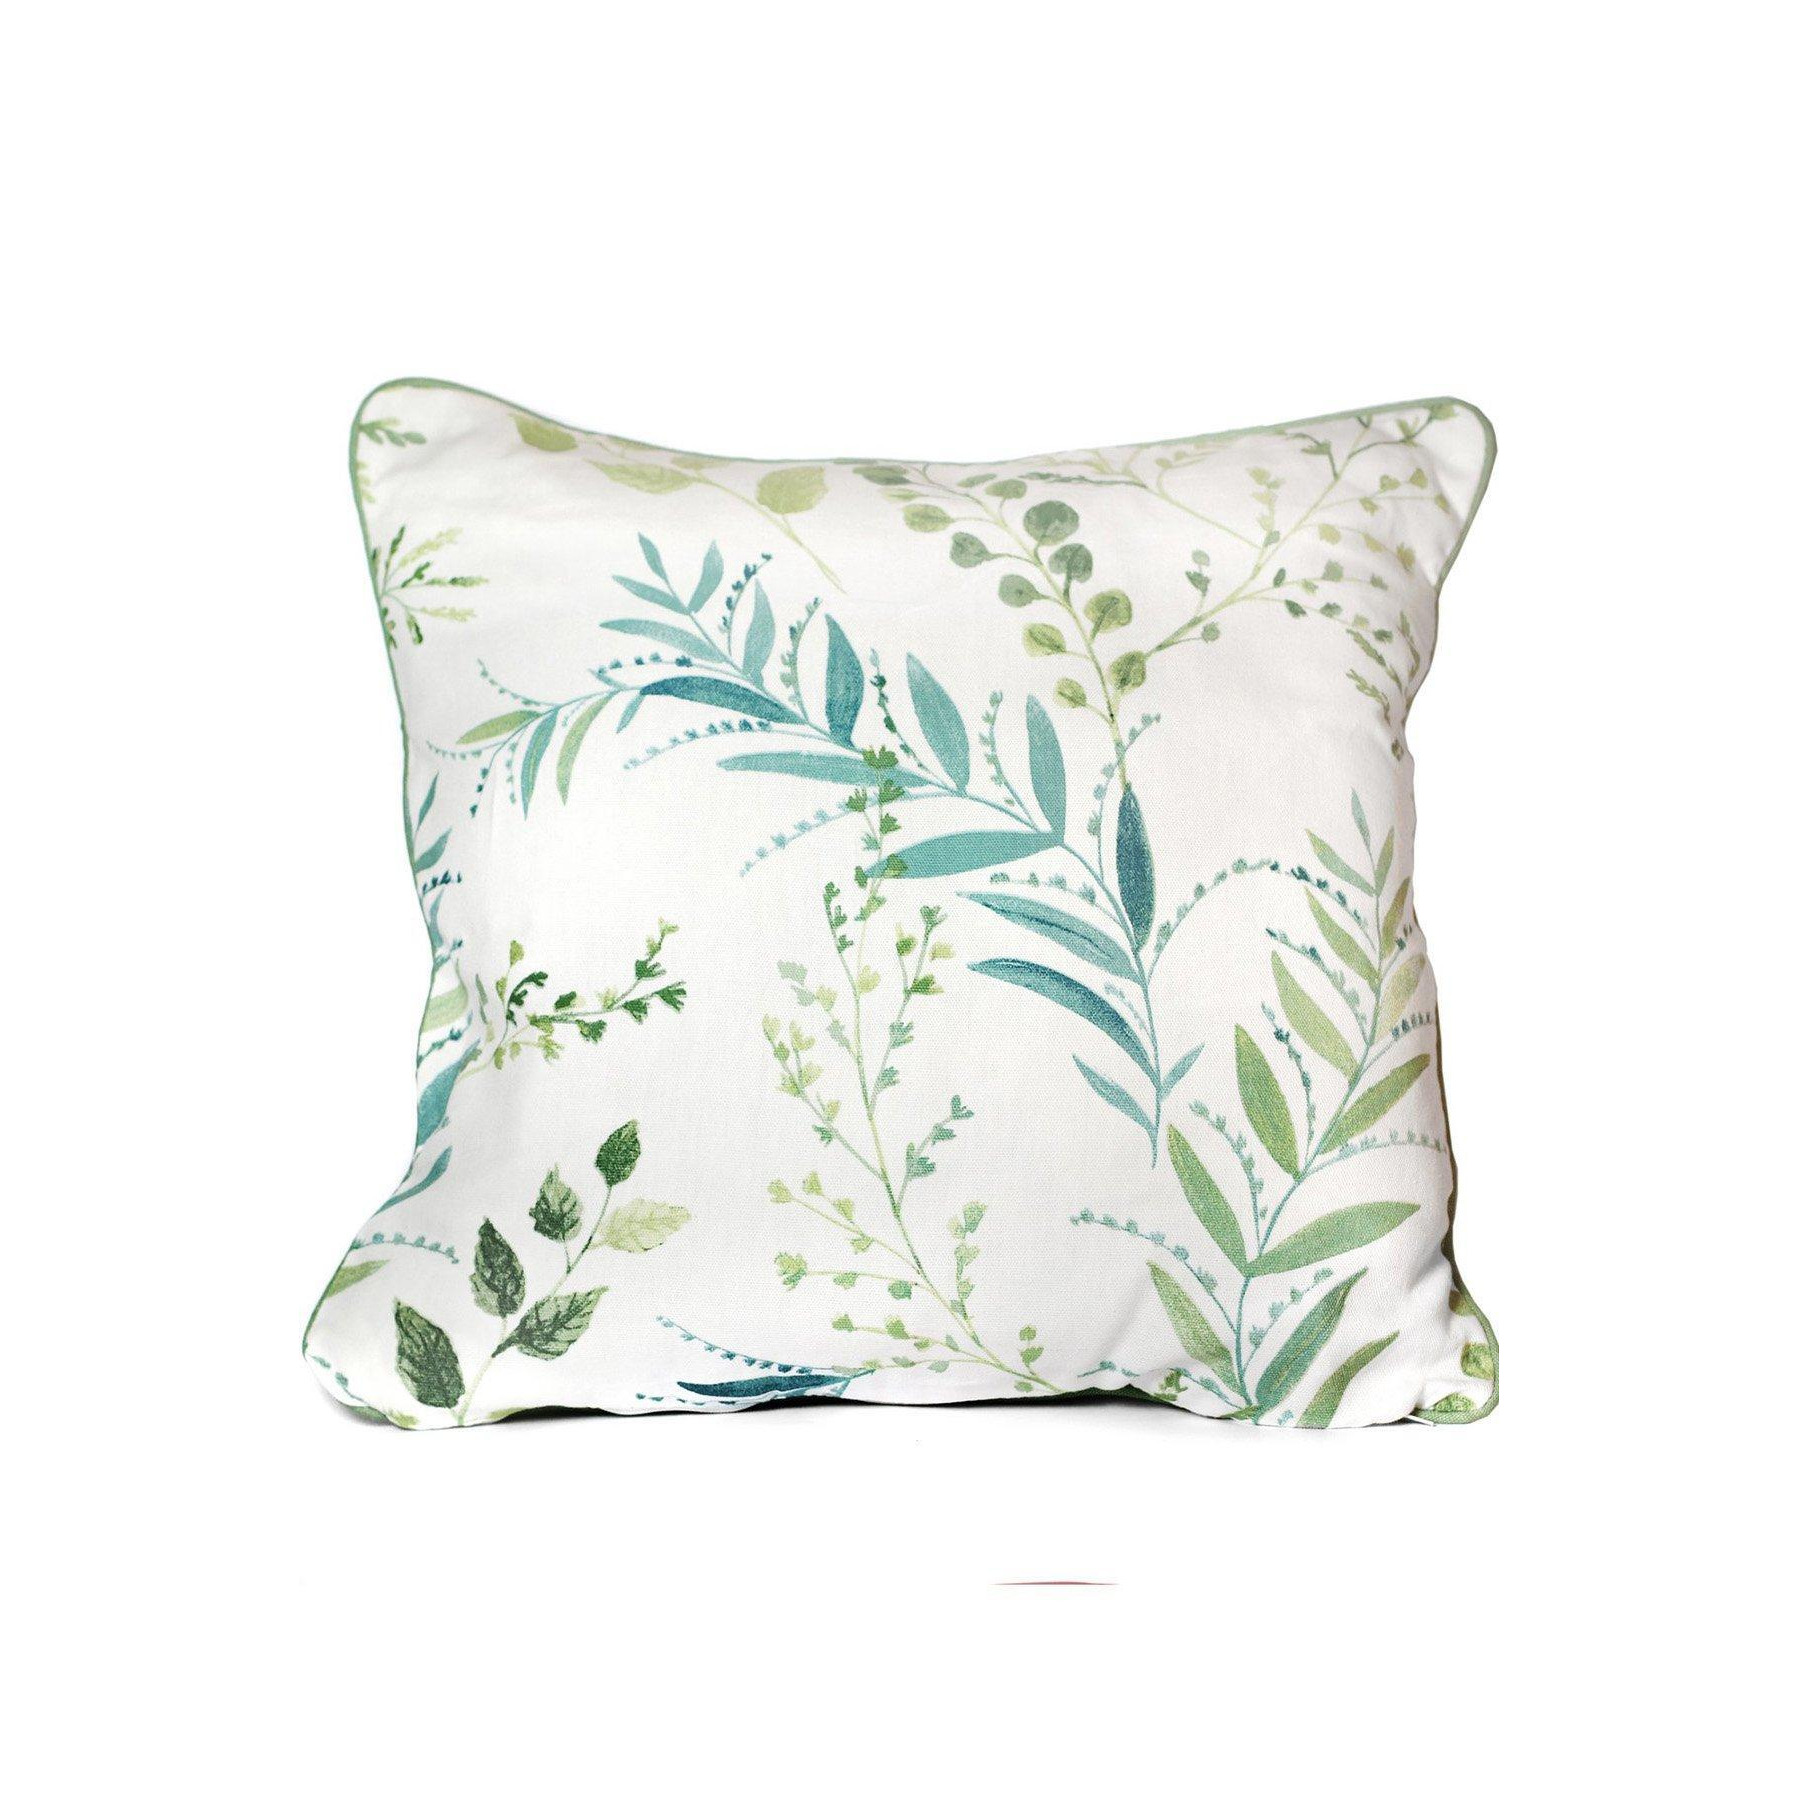 'Fernworthy' Spring Breeze Botanical Print Filled Cushion 100% Cotton - image 1